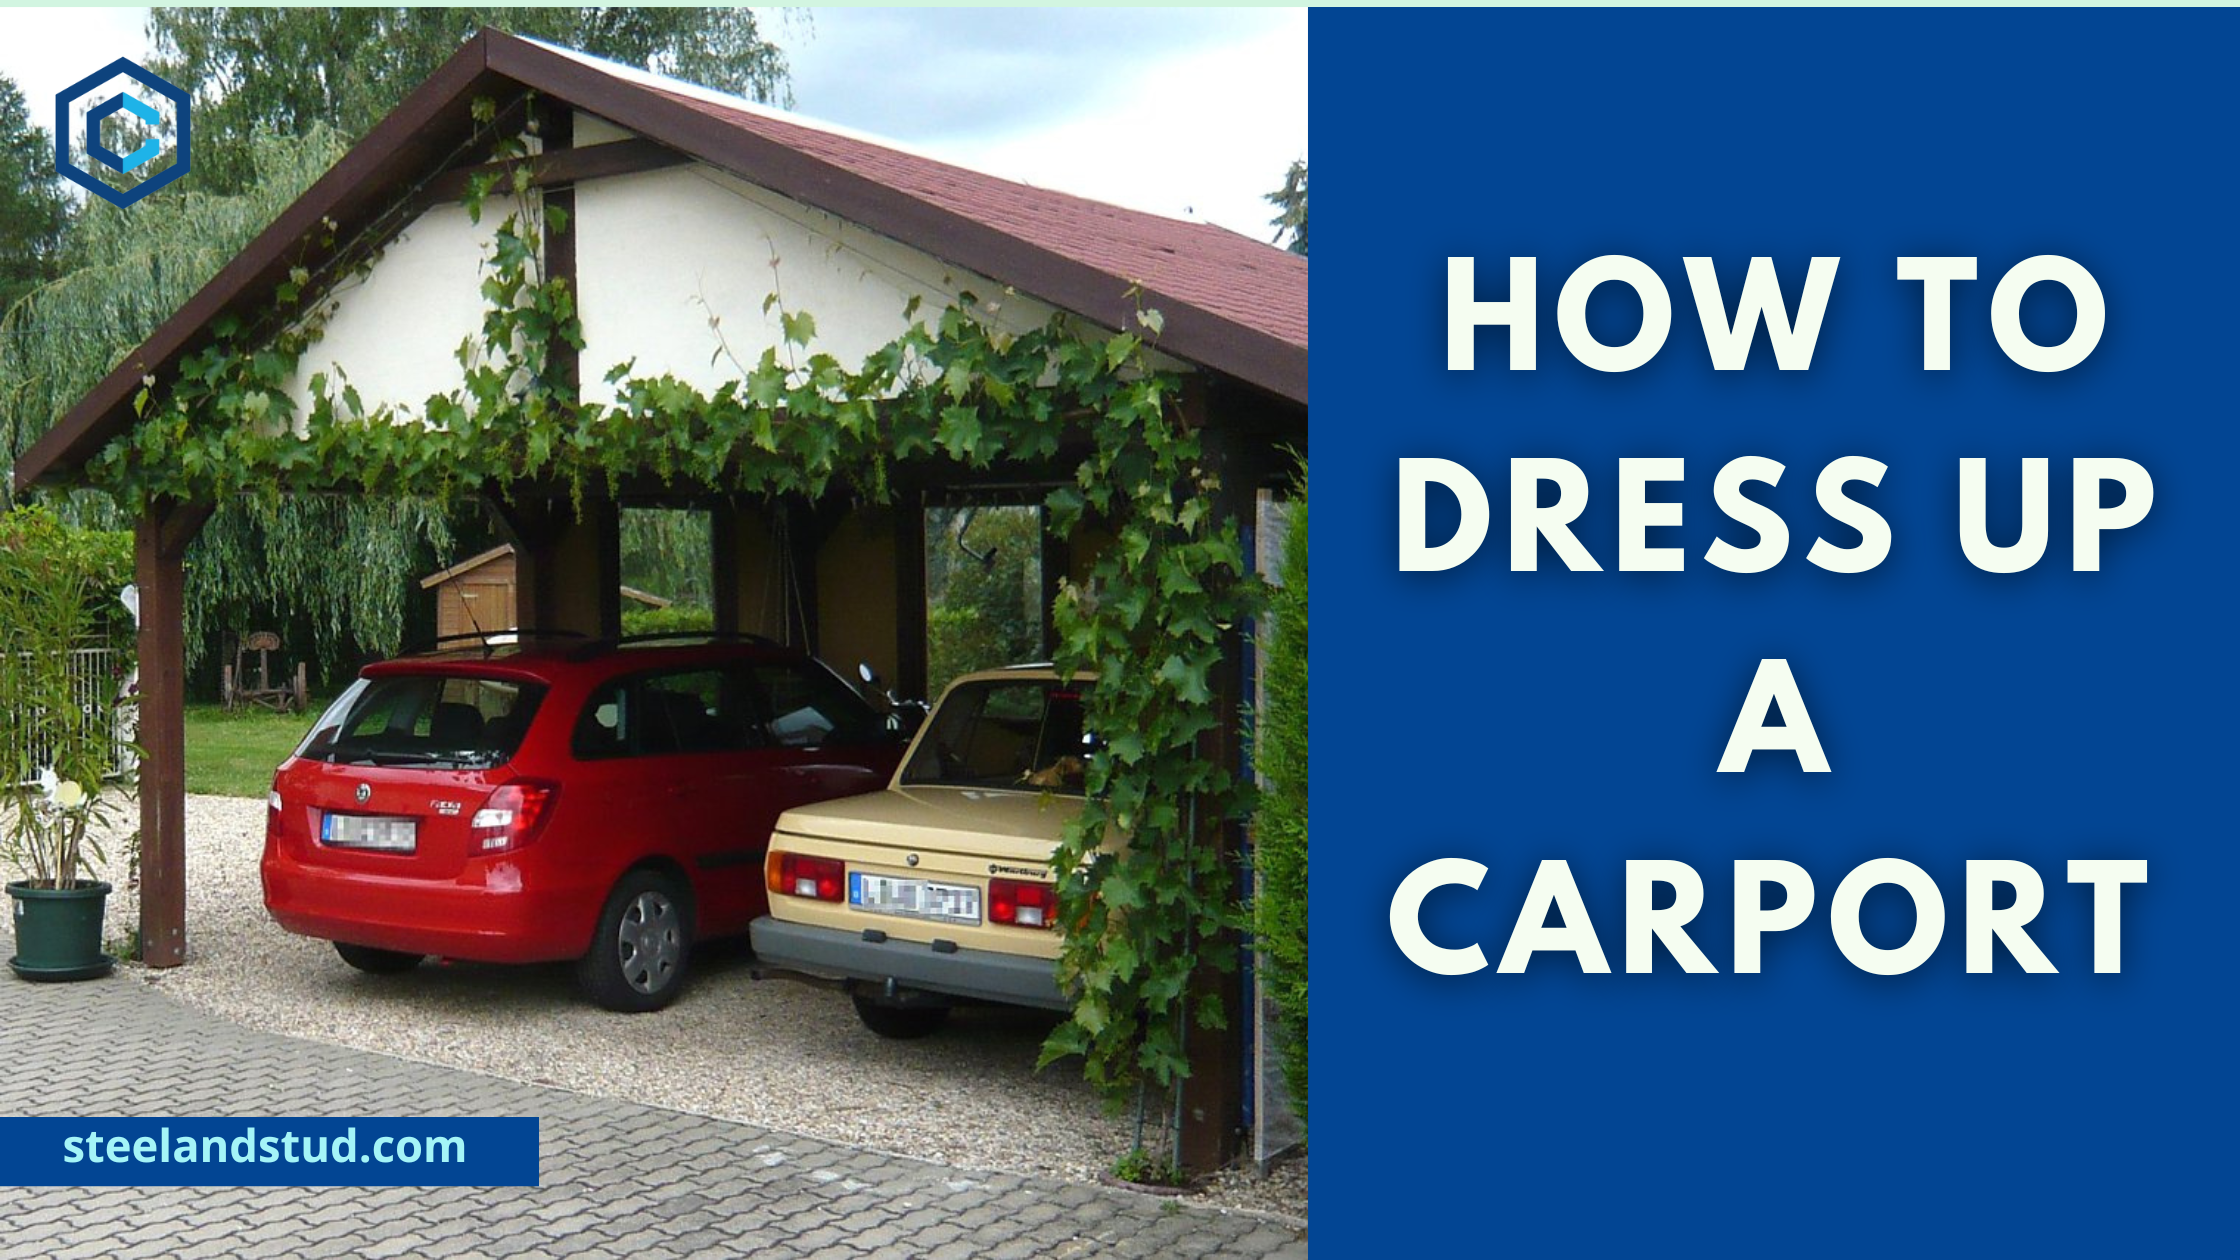 How to dress up a carport